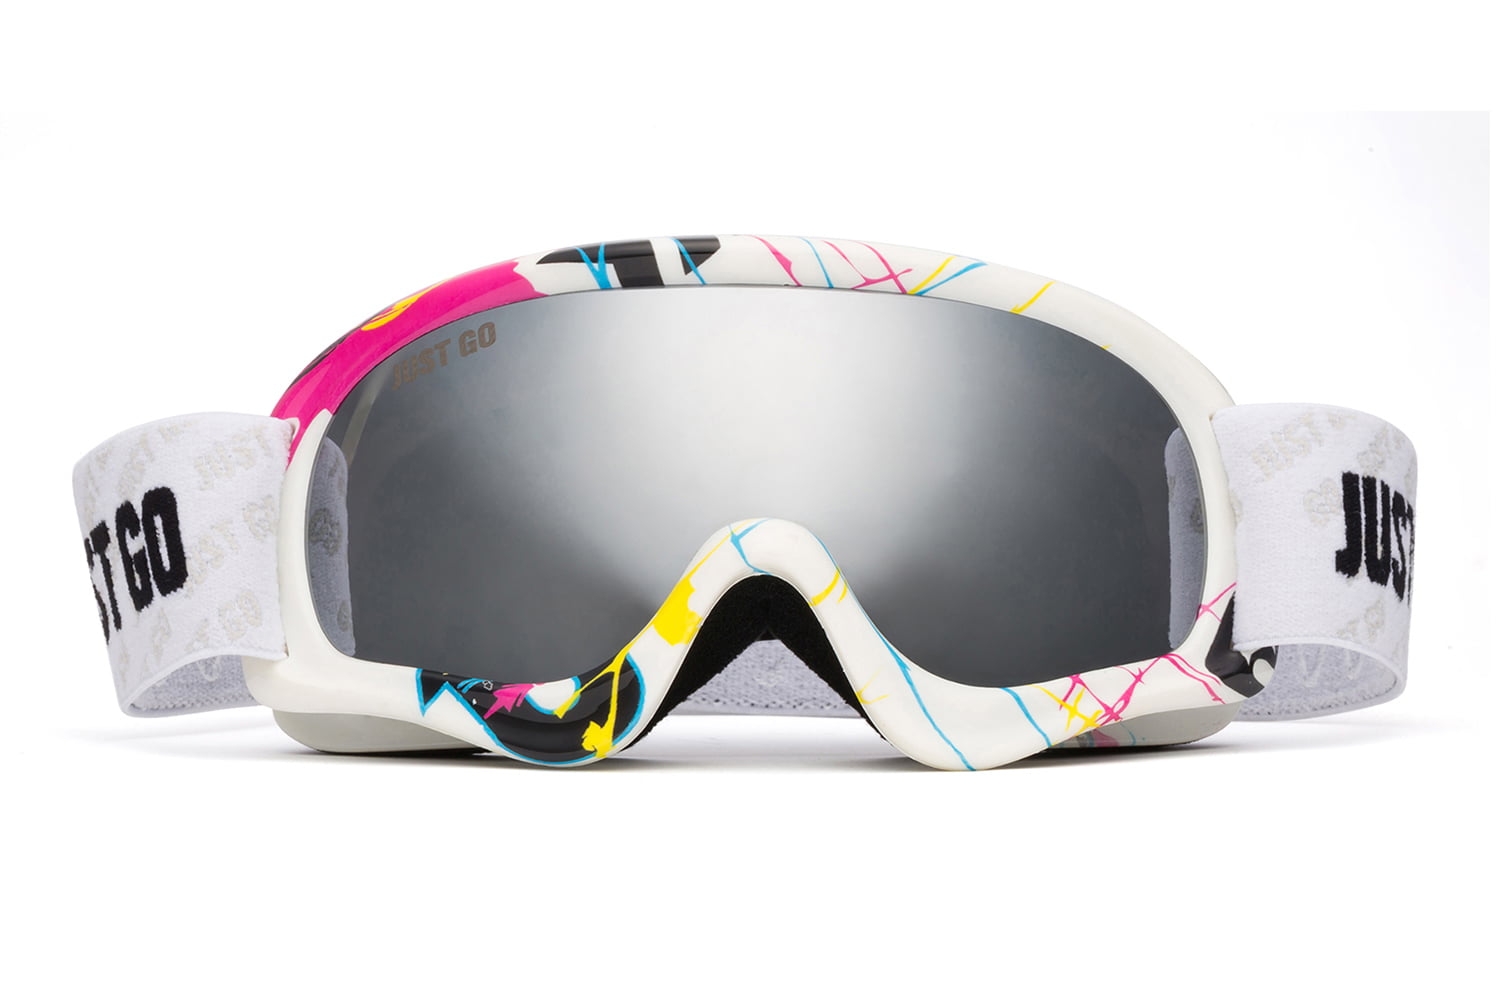 Meiyiu Ski Snowboard Goggles Box Ski Mirror Storage Box Waterproof Pressure-Resistant Portable Skiing Glasses Protection Case Cover for Snow Sport 